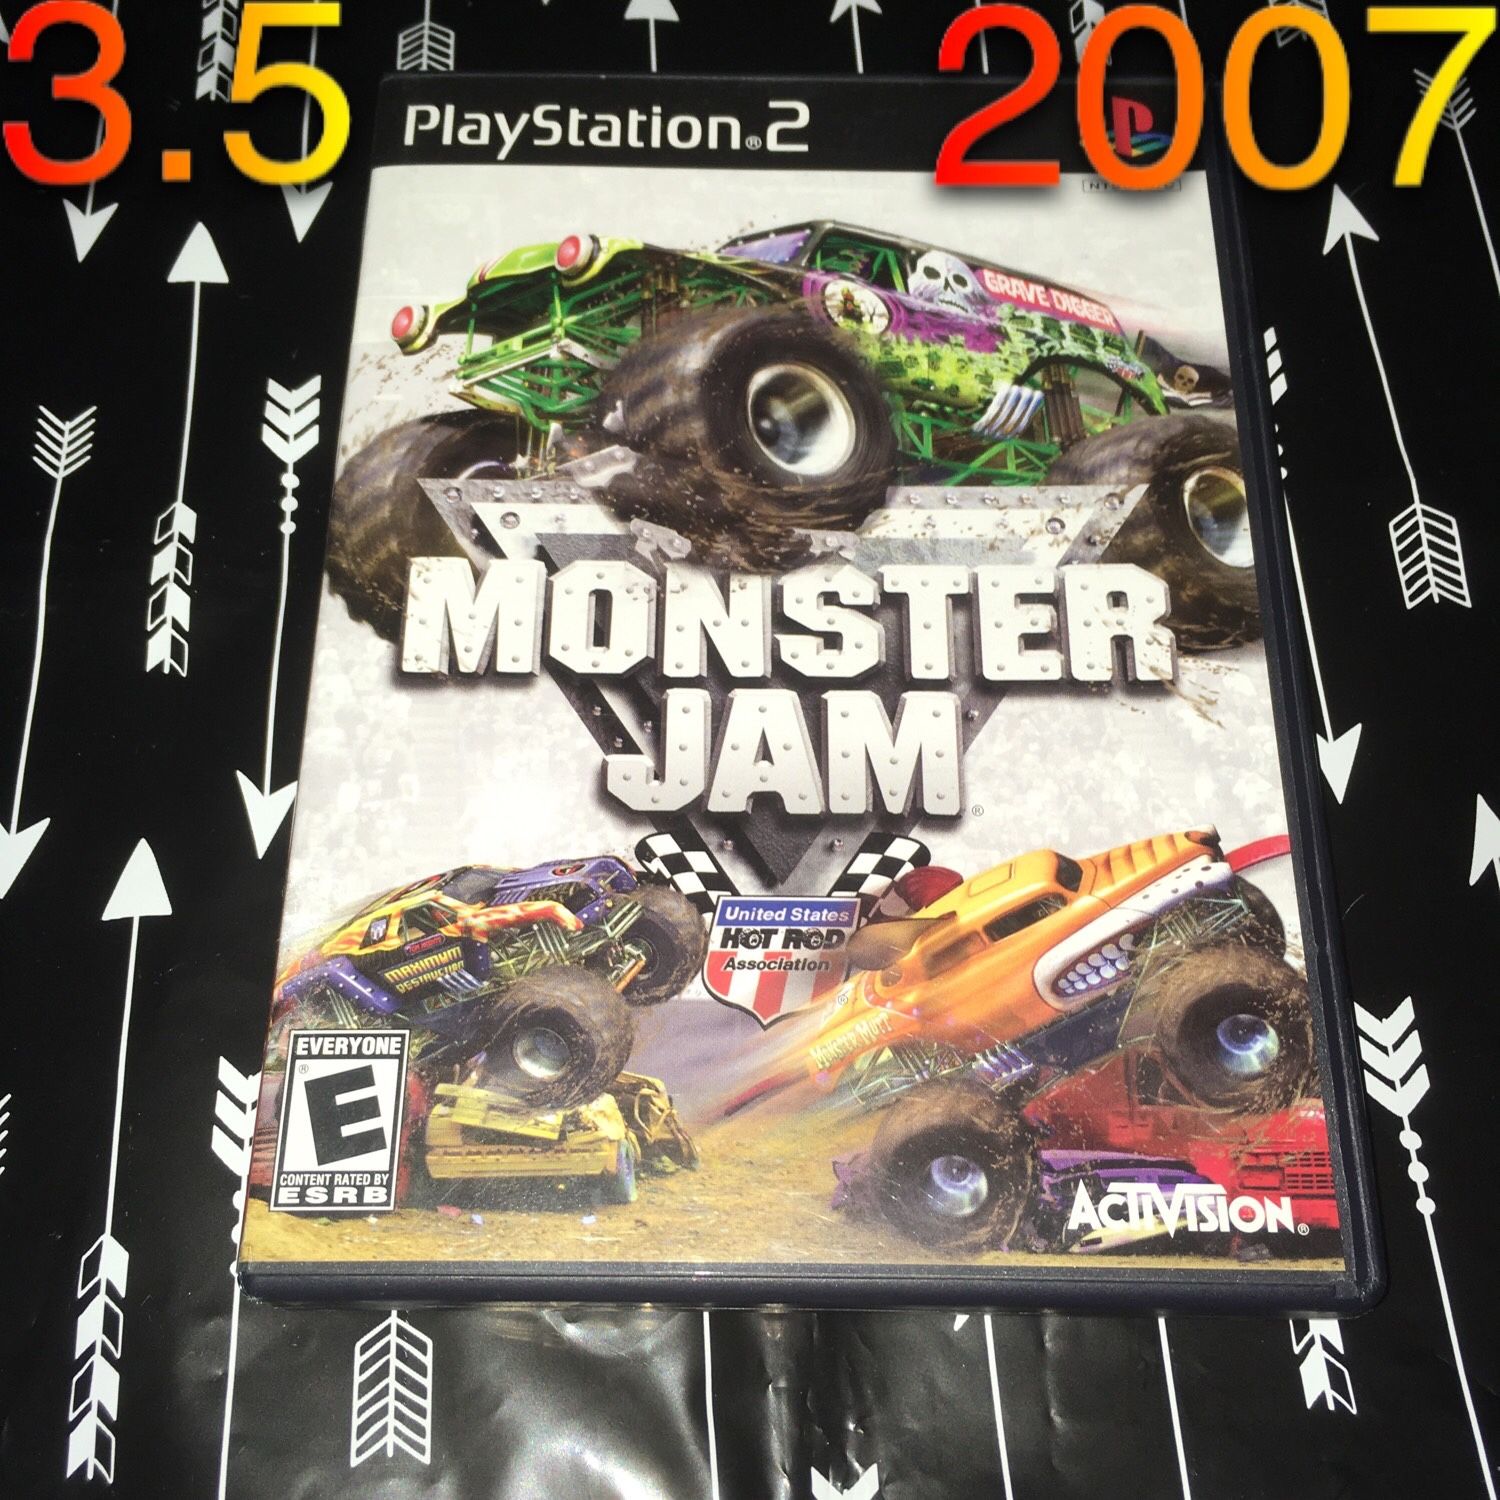 PS2 Monster Jam game CIB